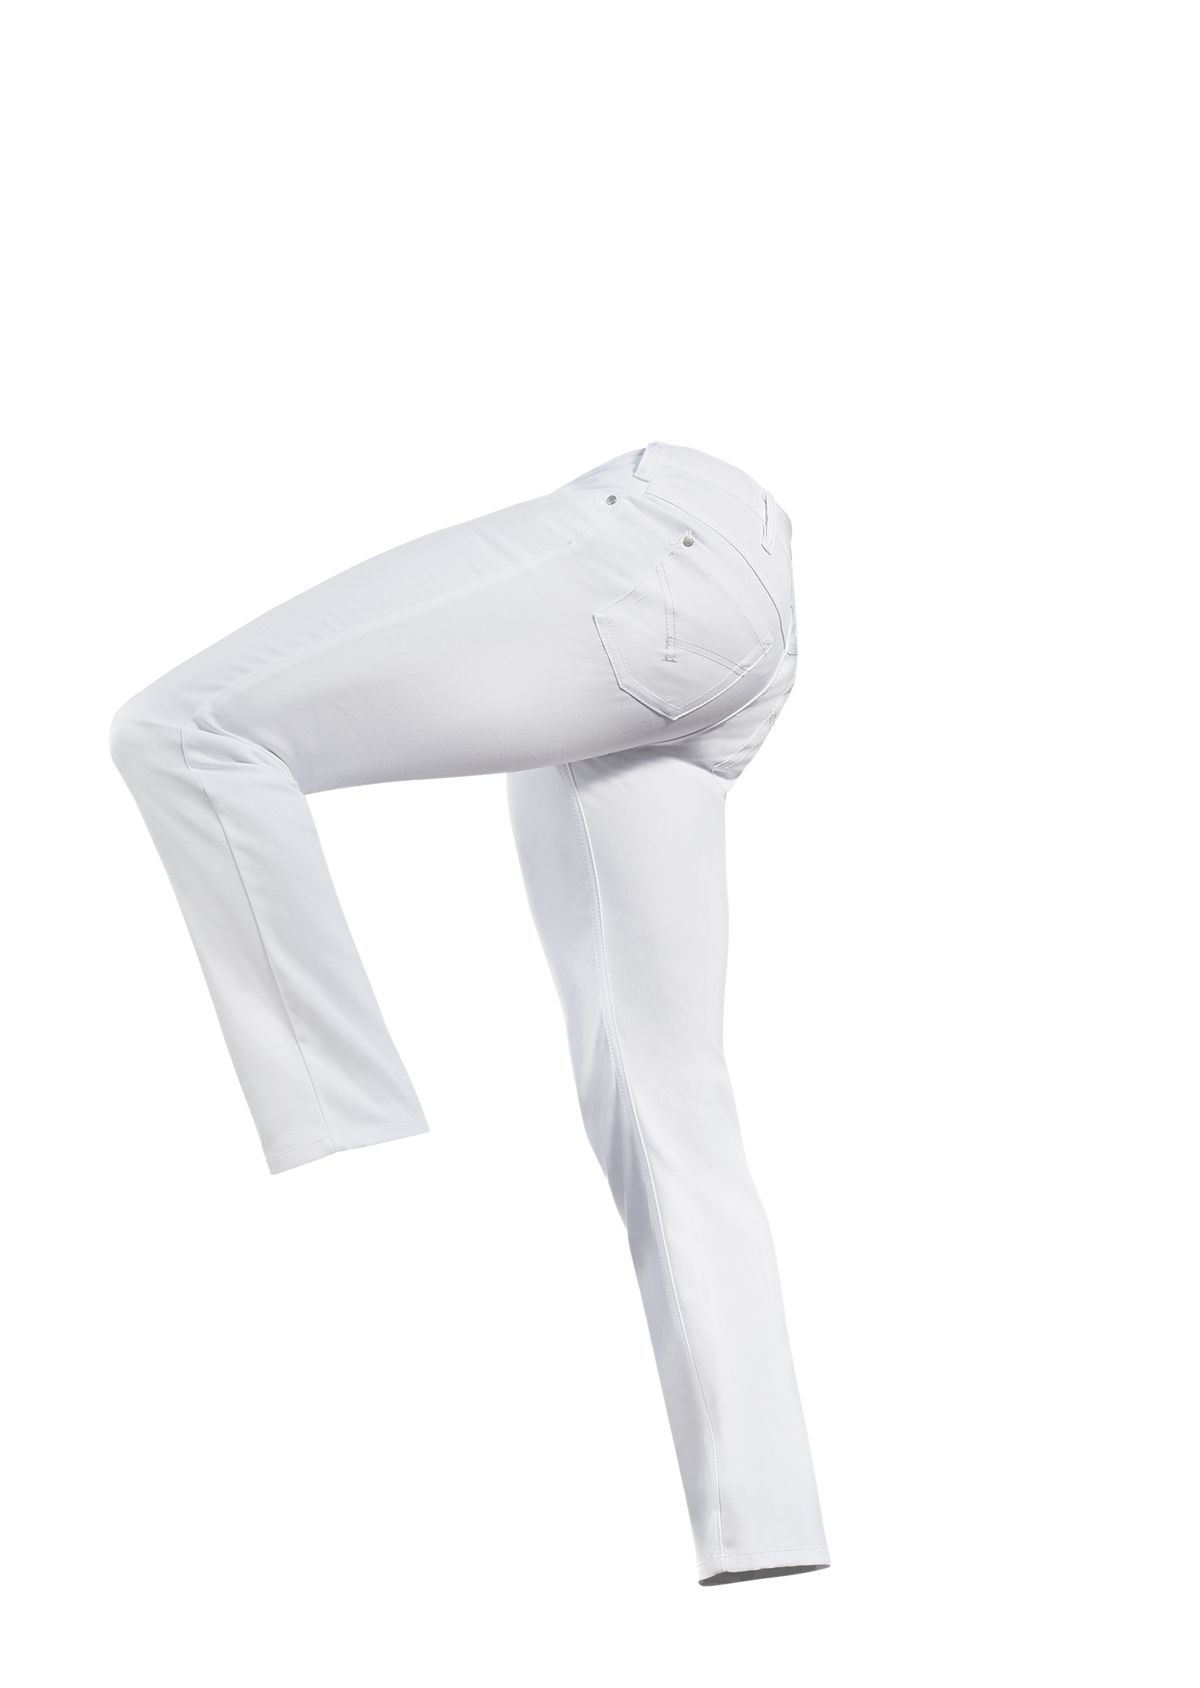 BP® Stretch men's jeans